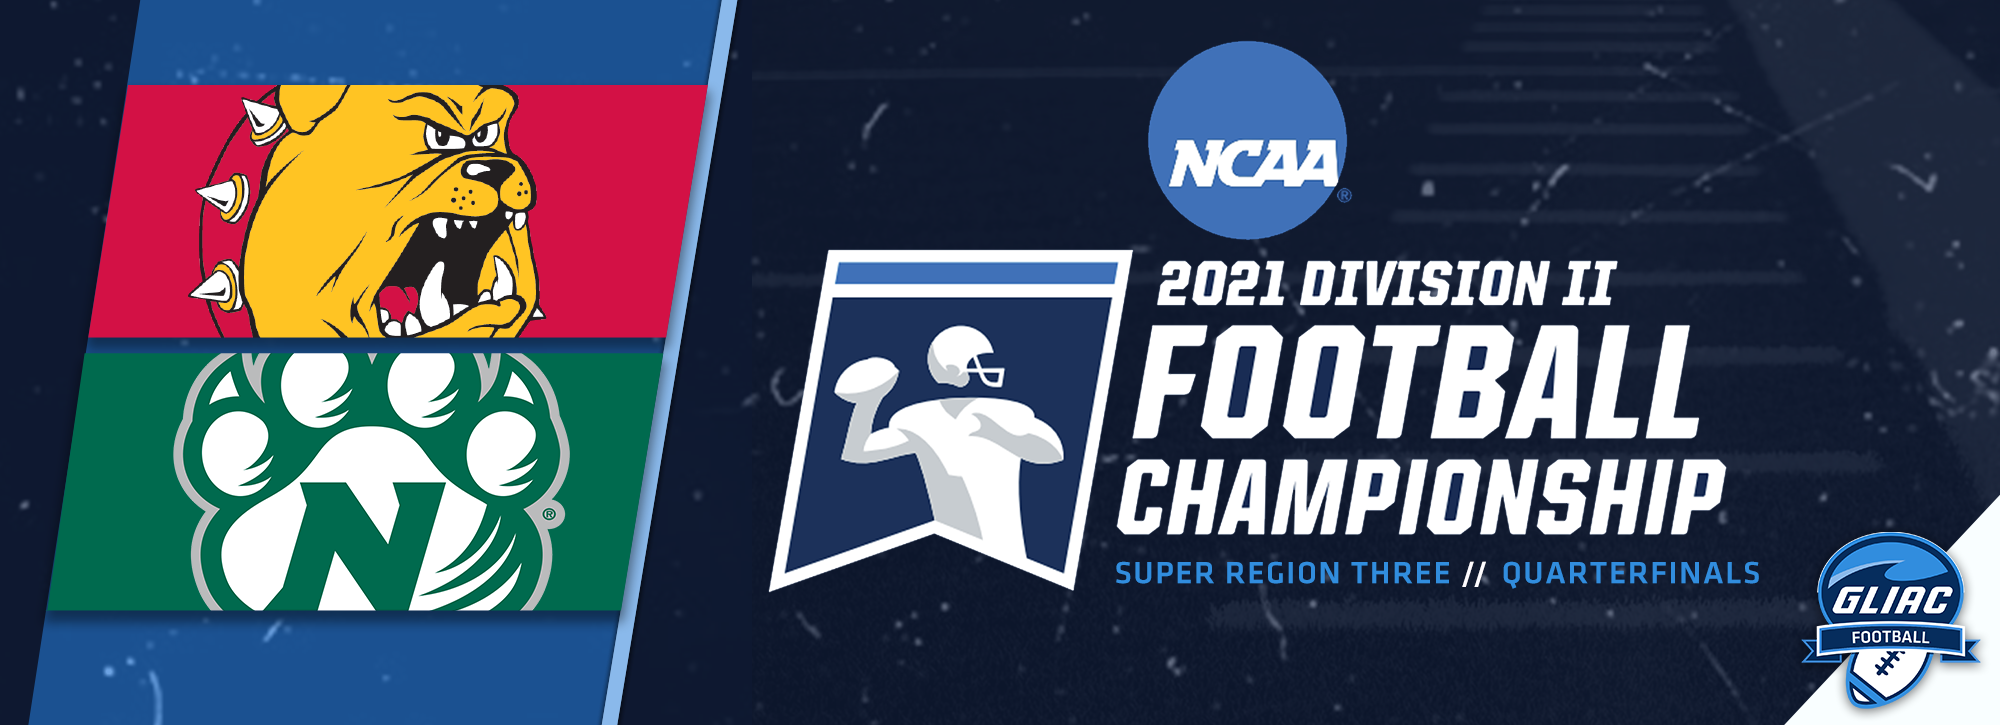 2021 GLIAC Football Gameday - NCAA Division II Championship Quarterfinals